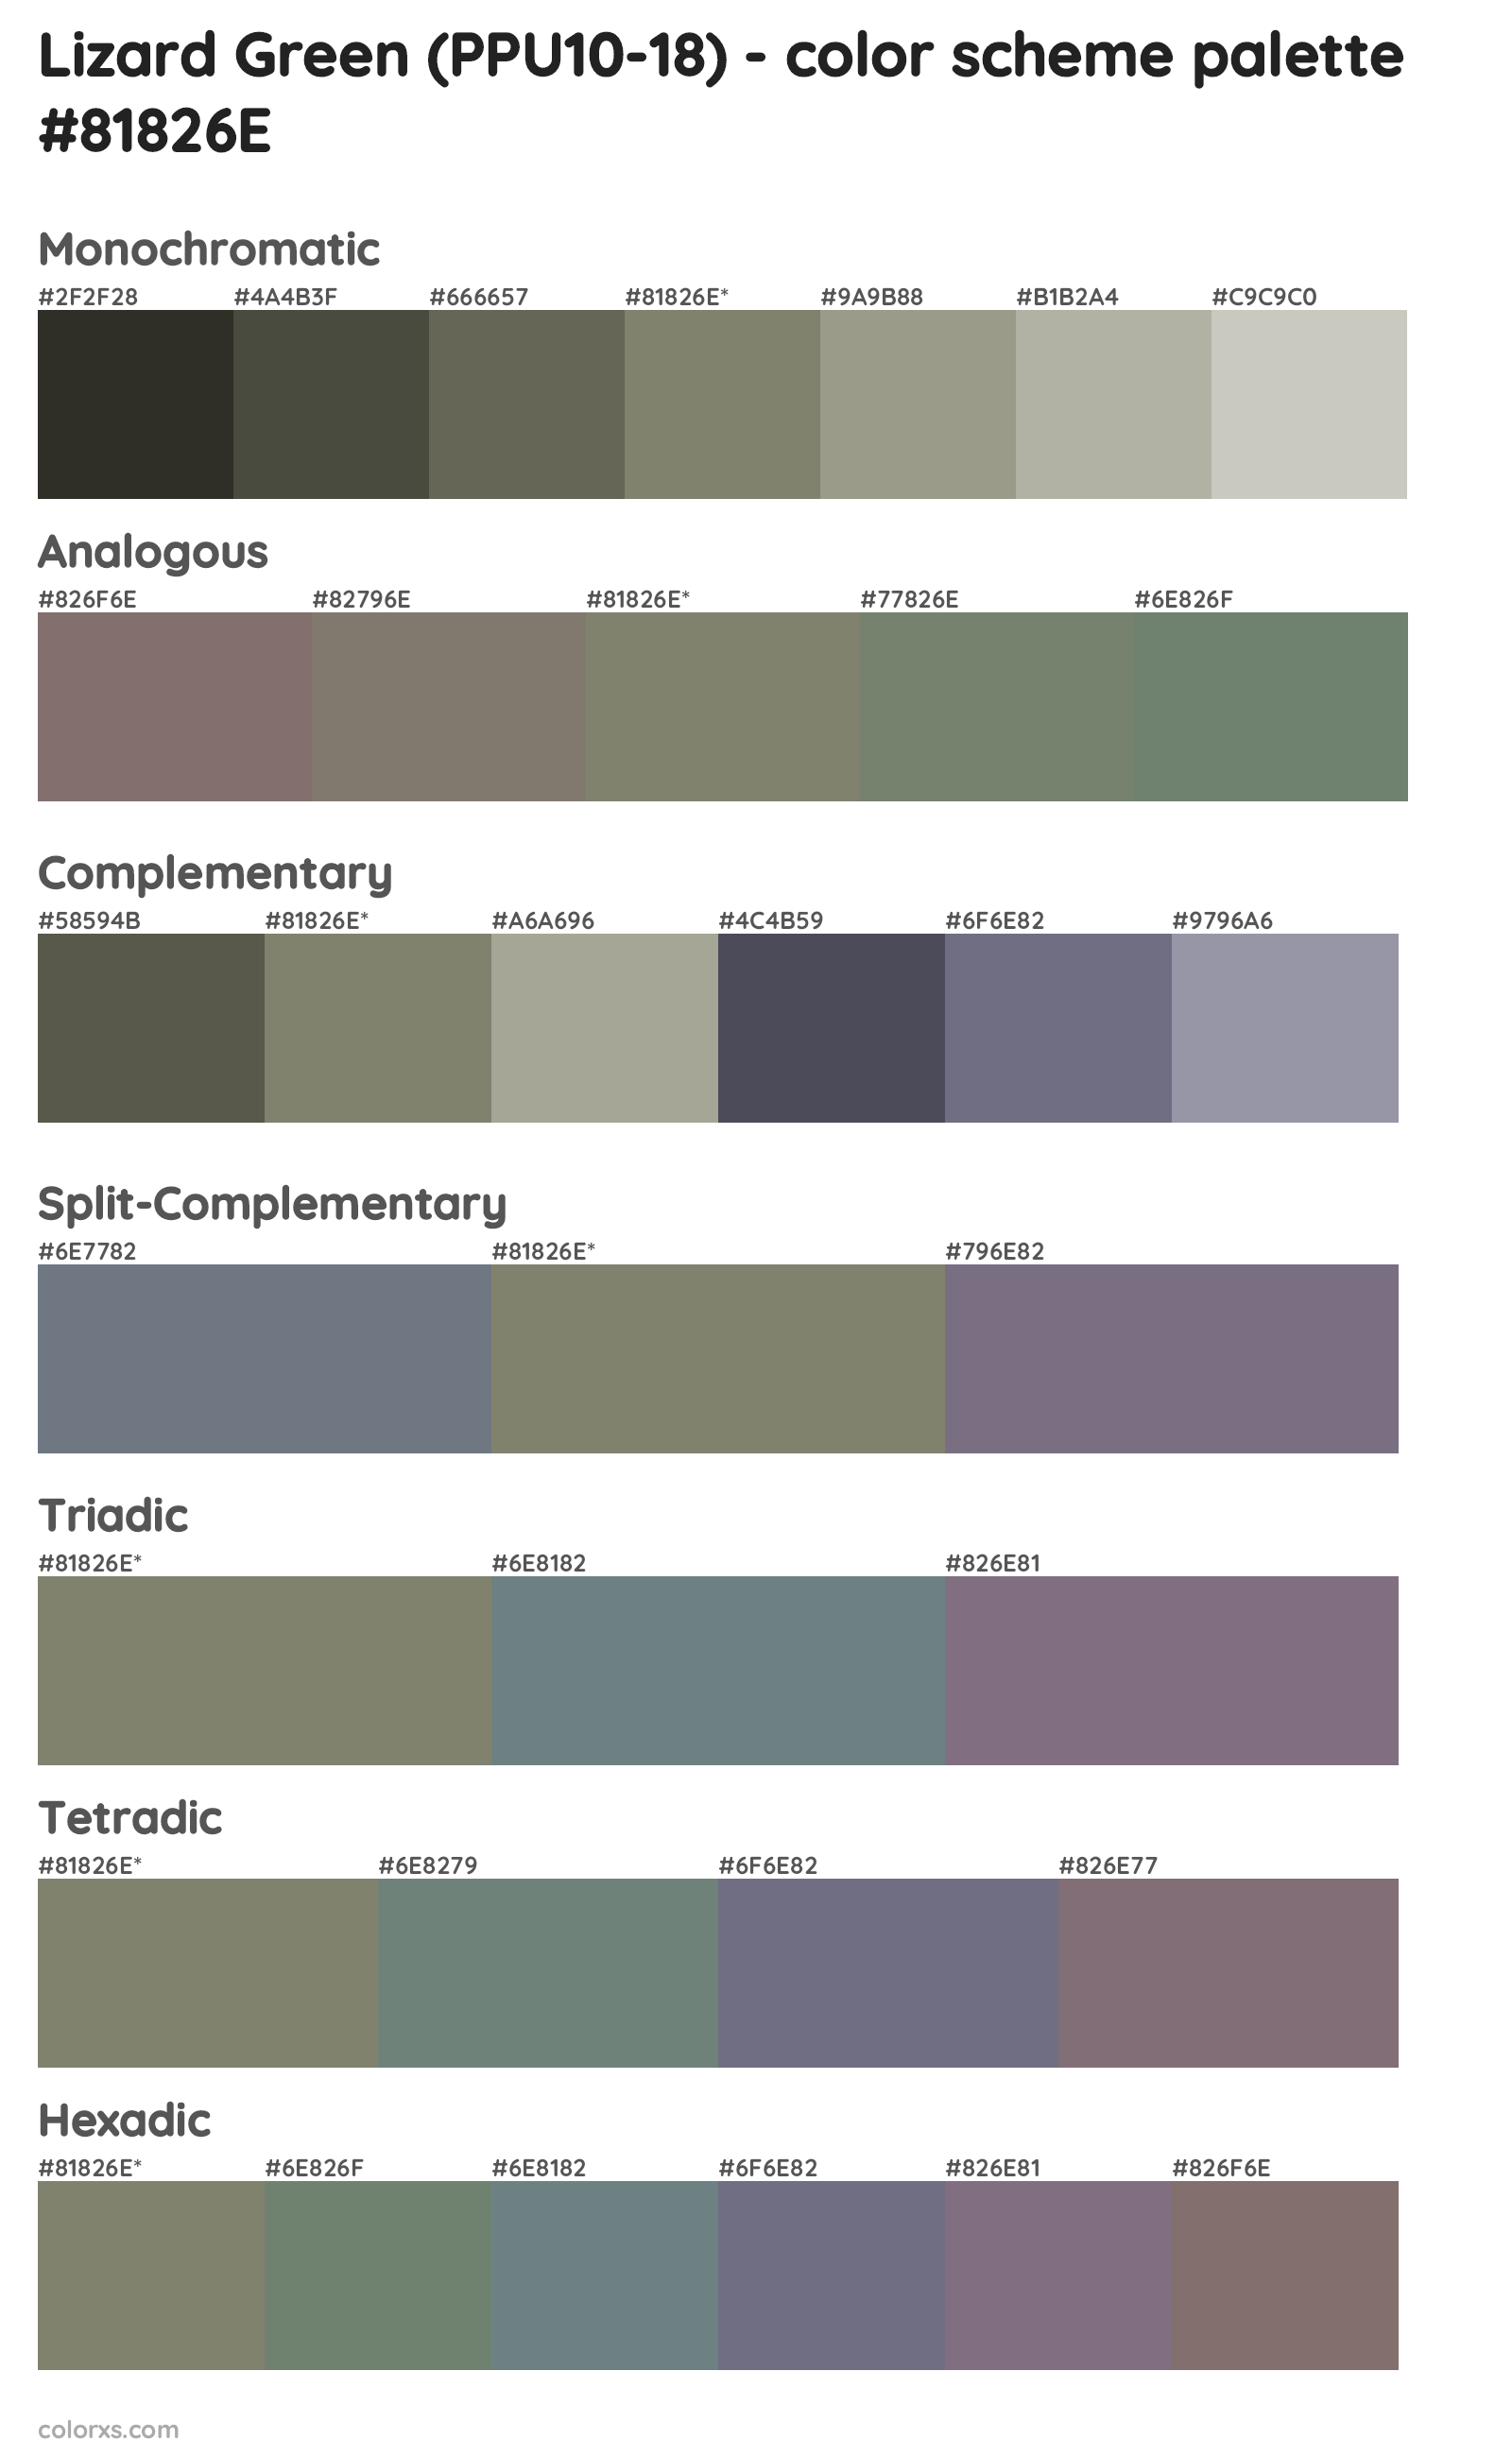 Lizard Green (PPU10-18) Color Scheme Palettes